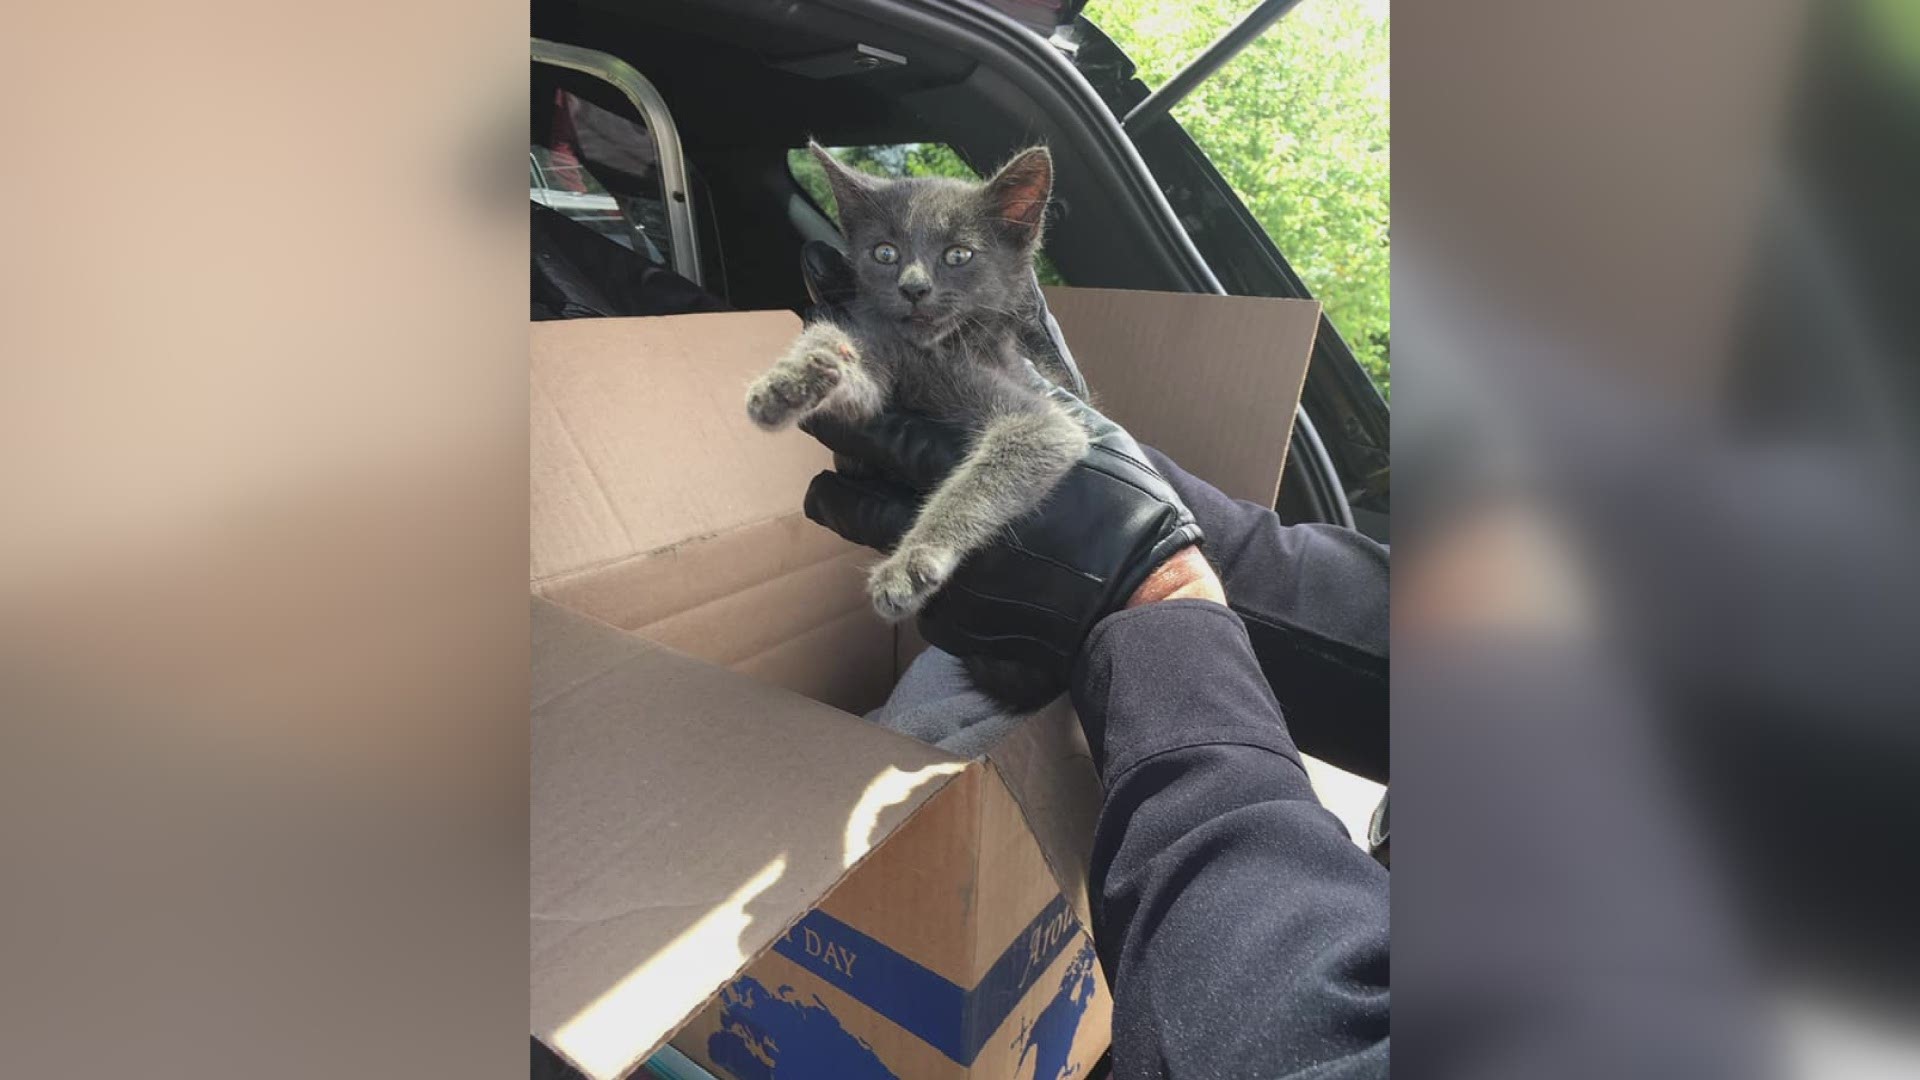 Kitten found in engine bay of vehicle named 'Smokey'.